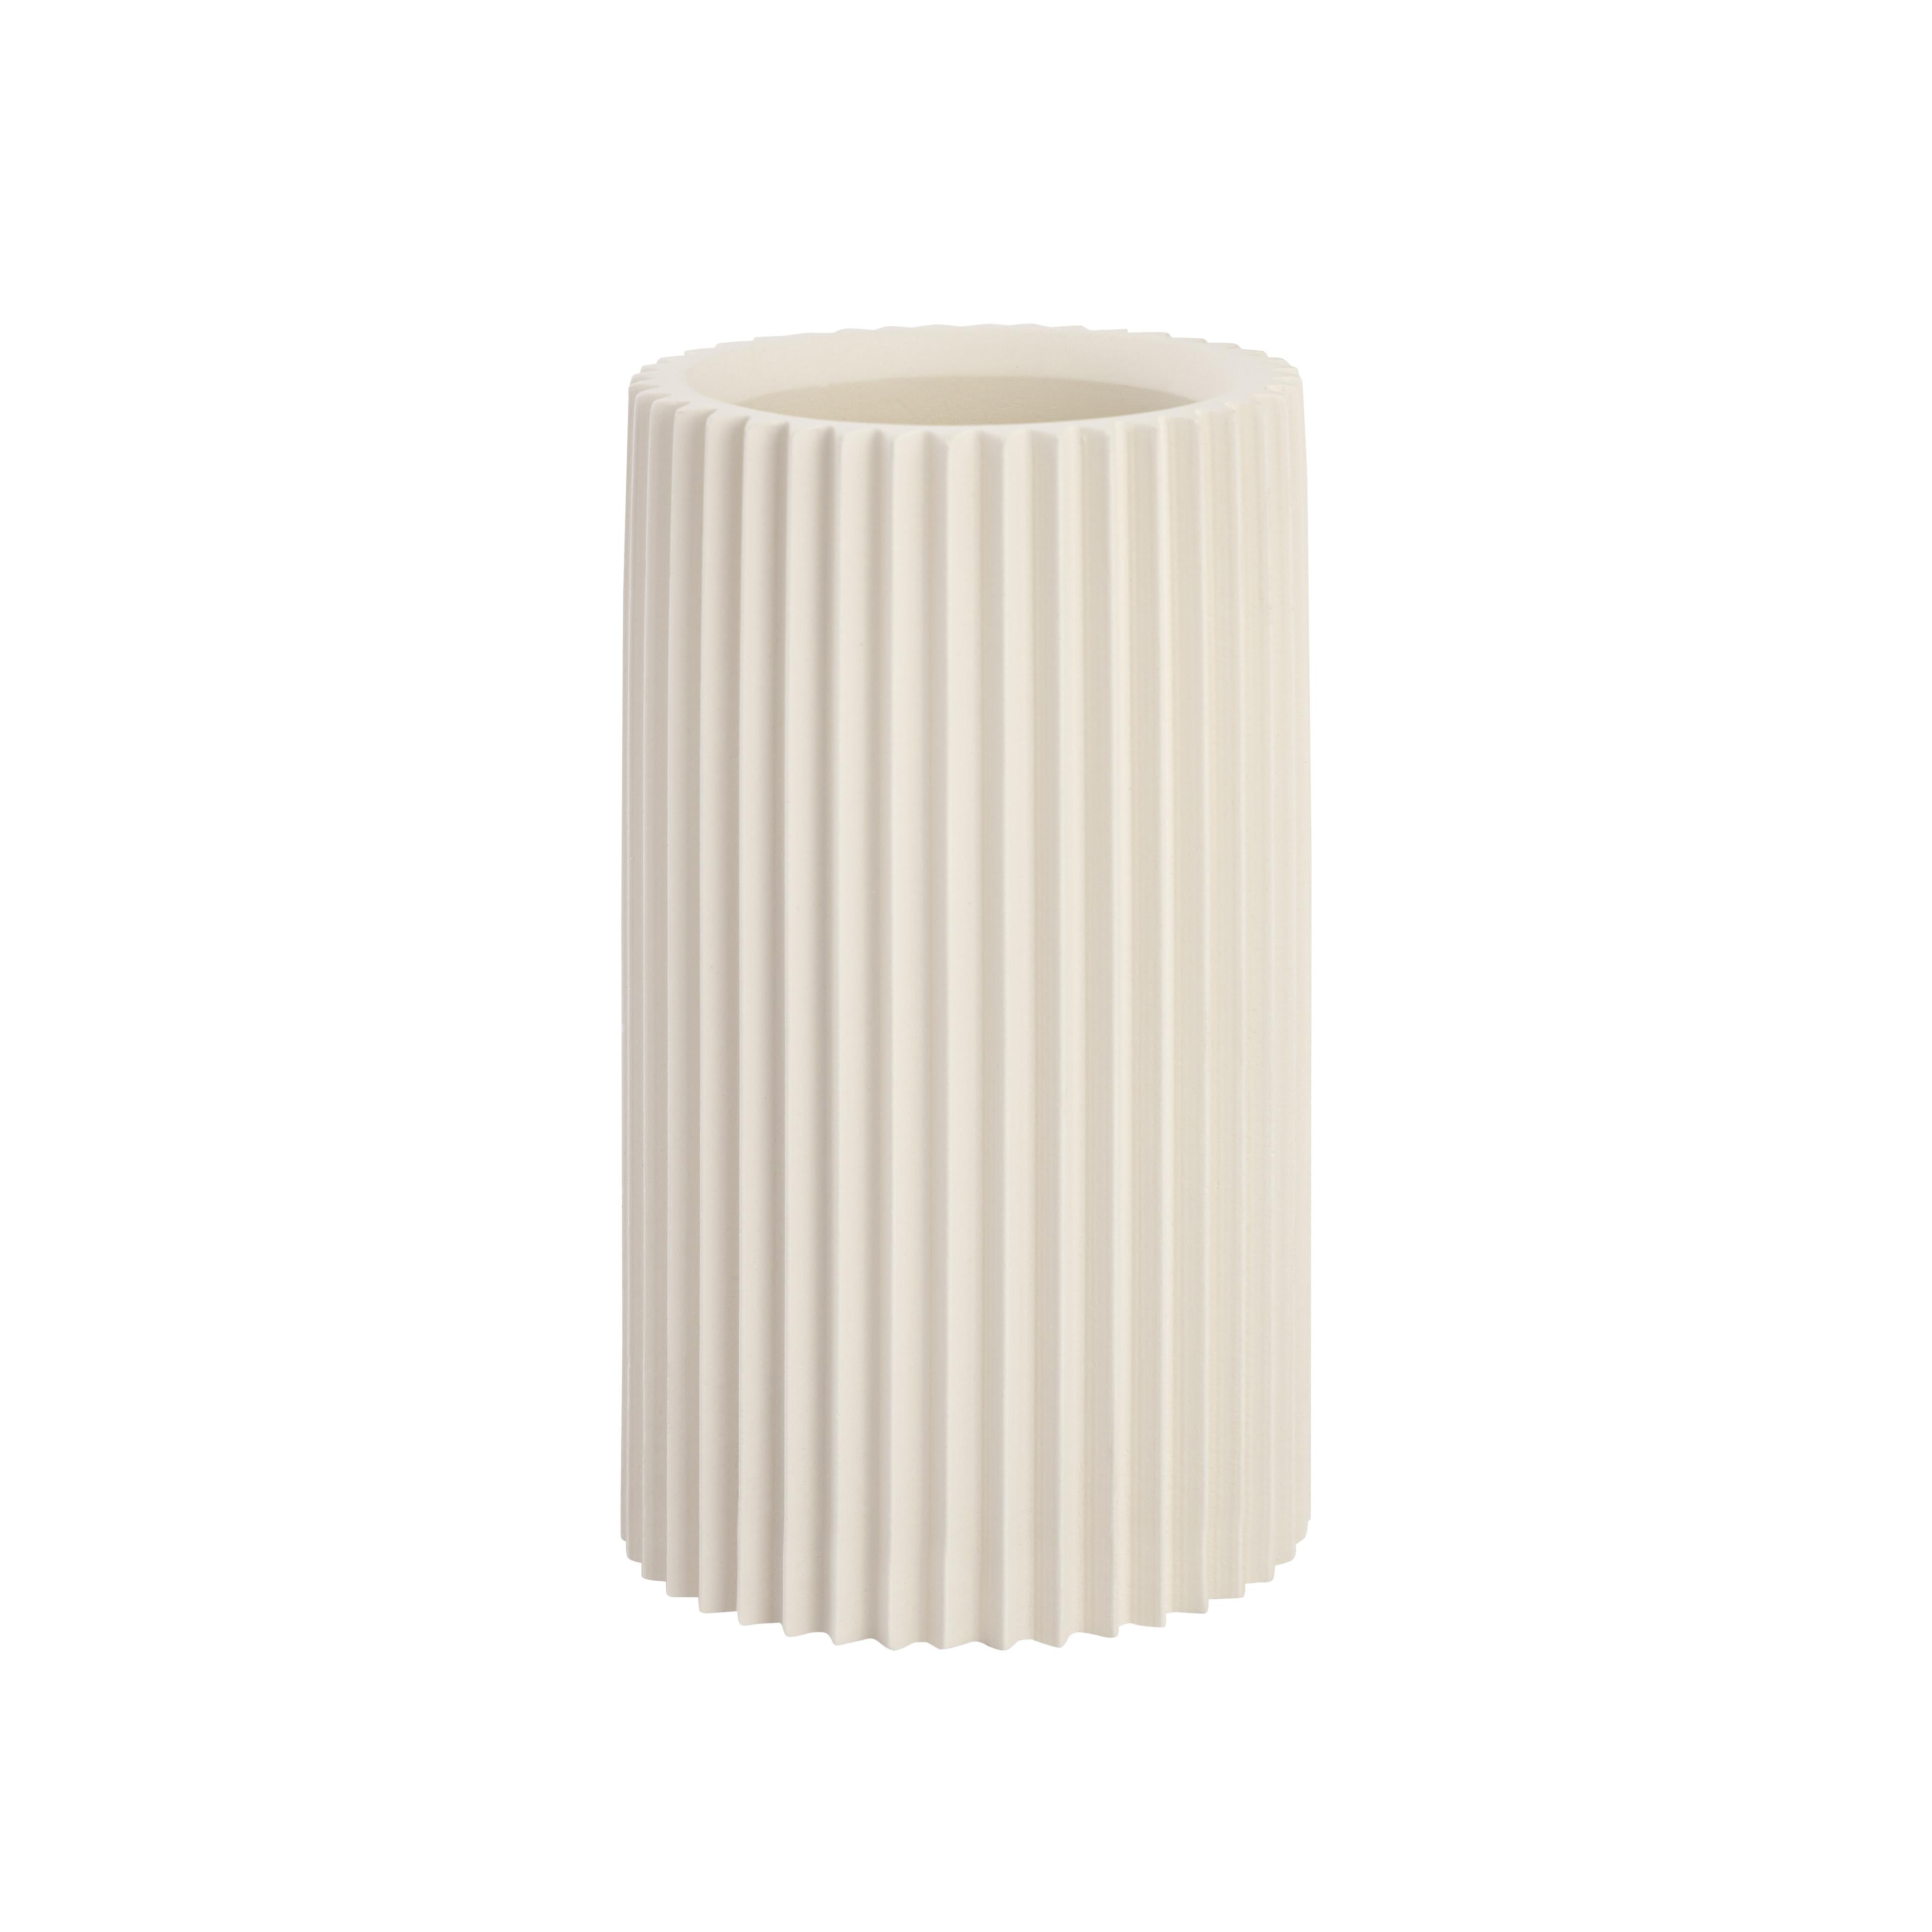 Tov Furniture Vases - Jenna White Concrete Table Vase